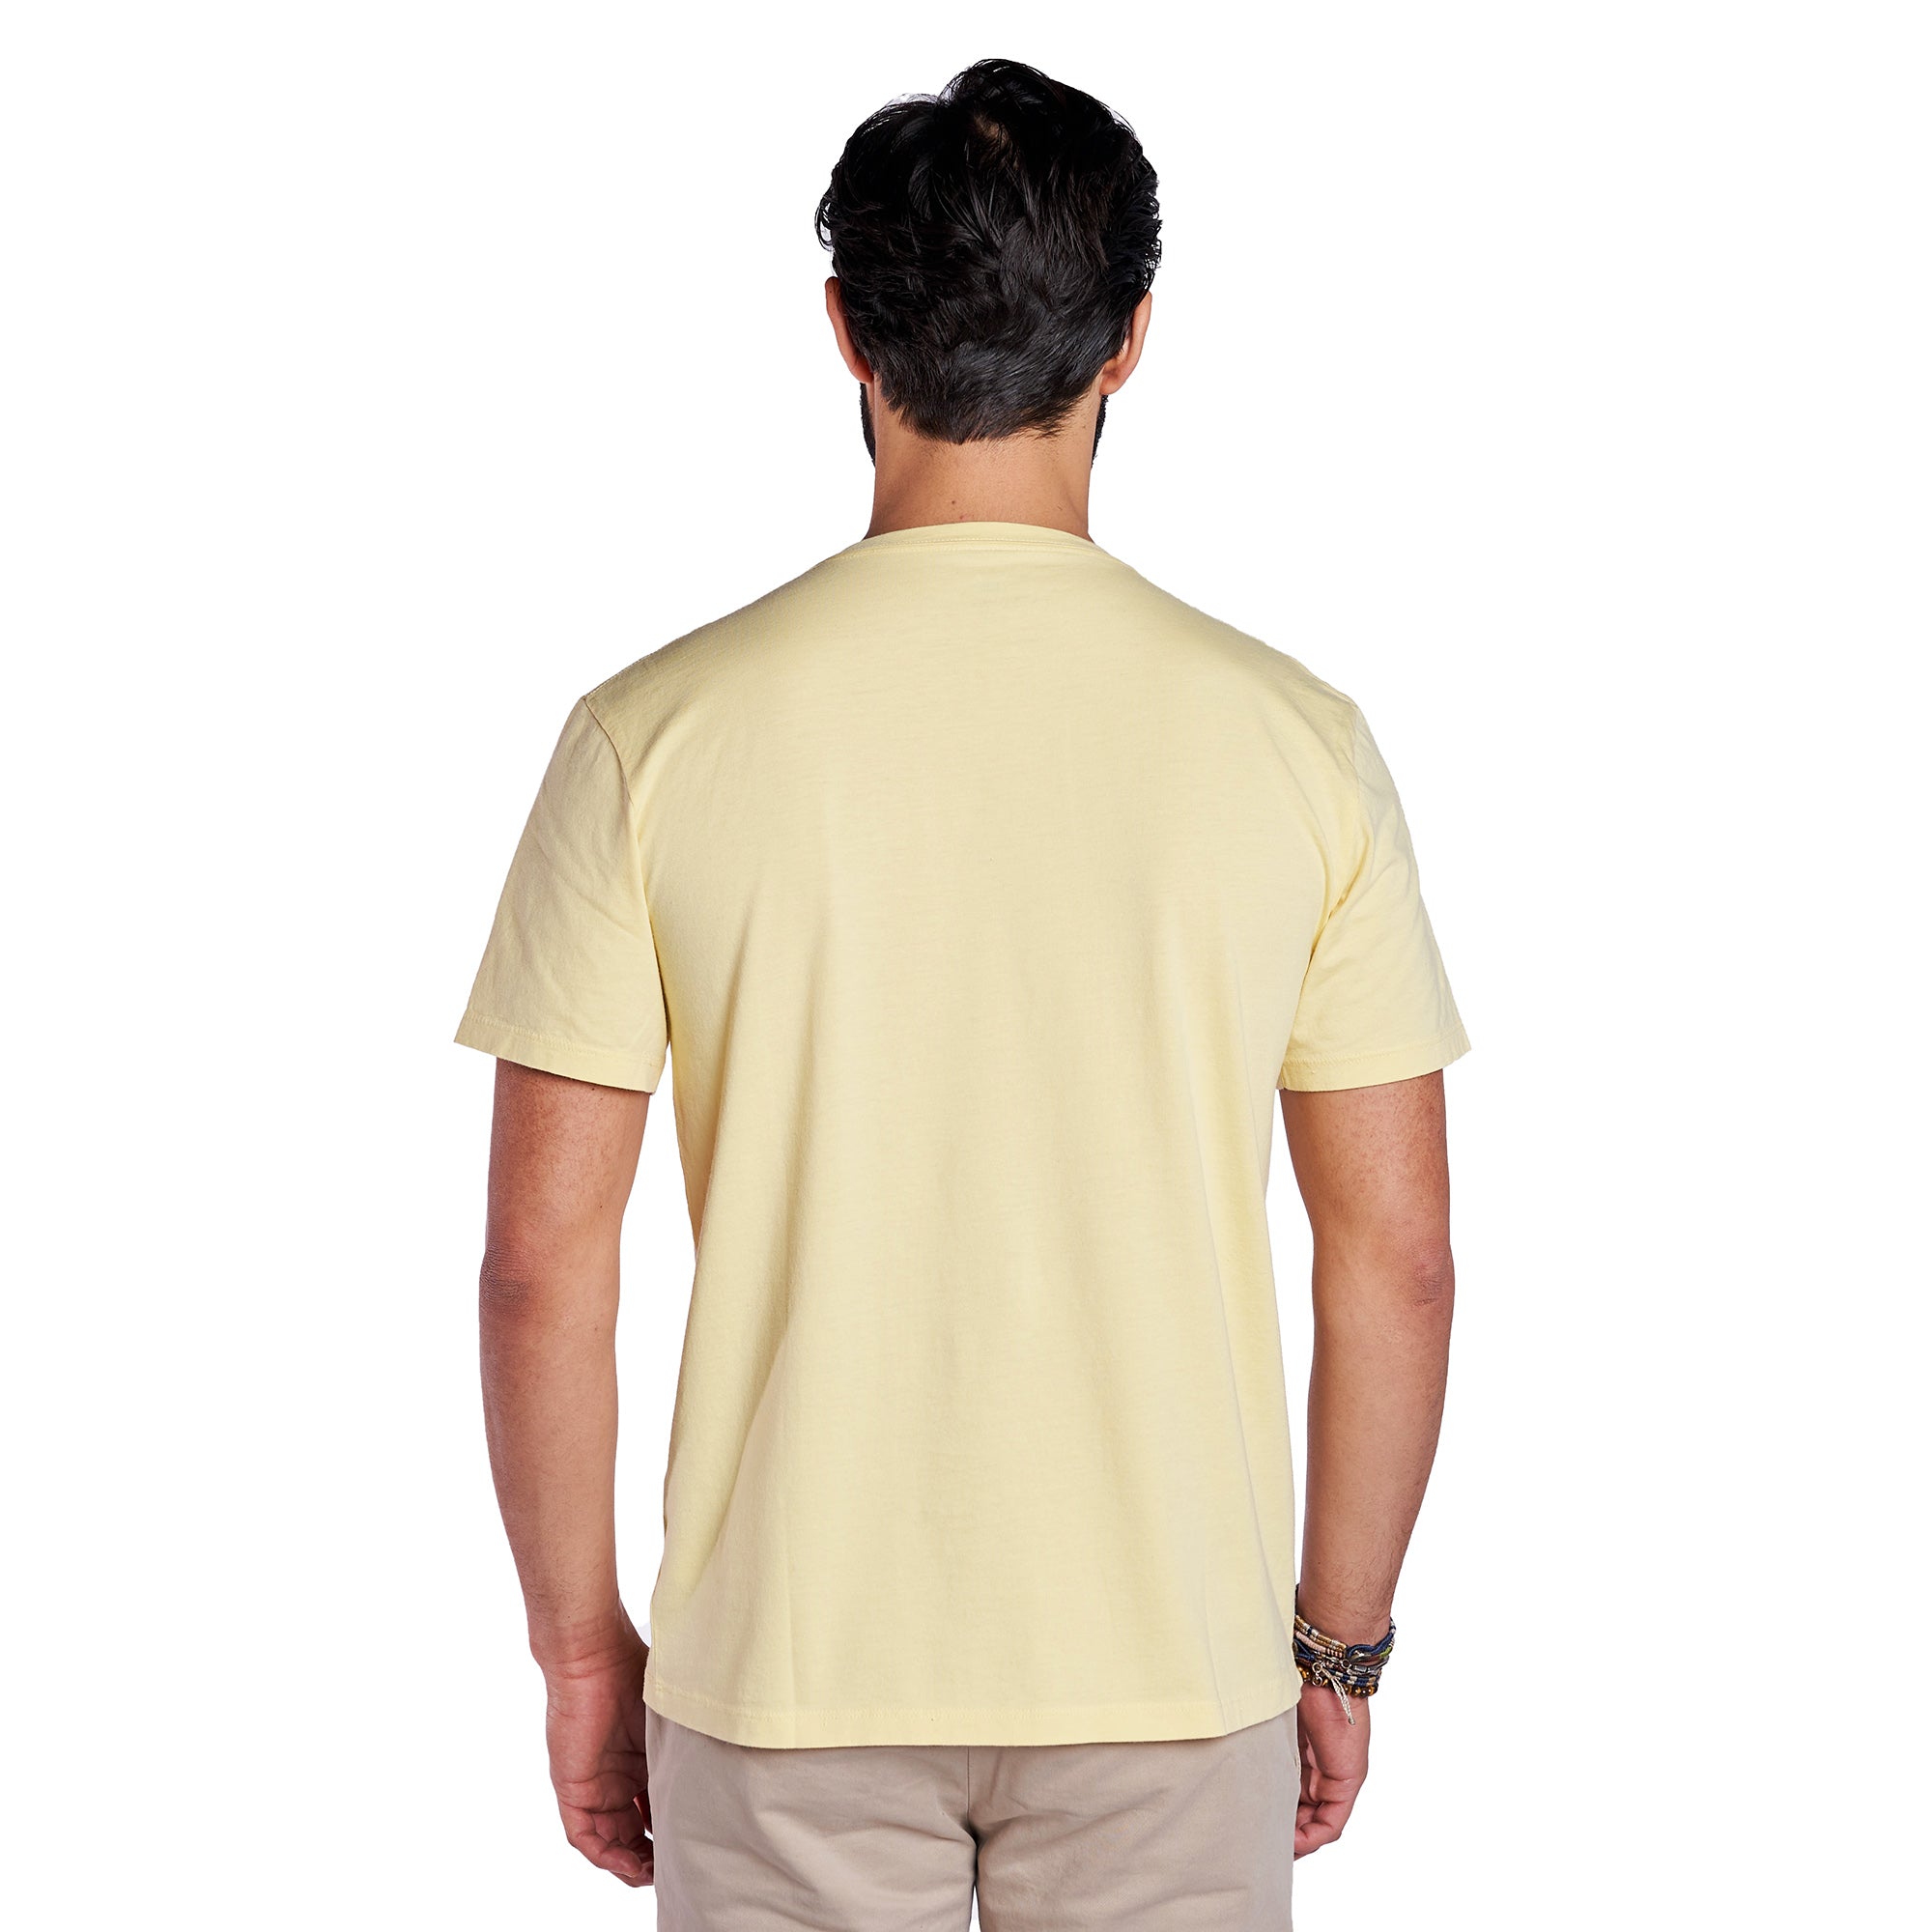 Vintage Crew T-Shirt - Pale Yellow